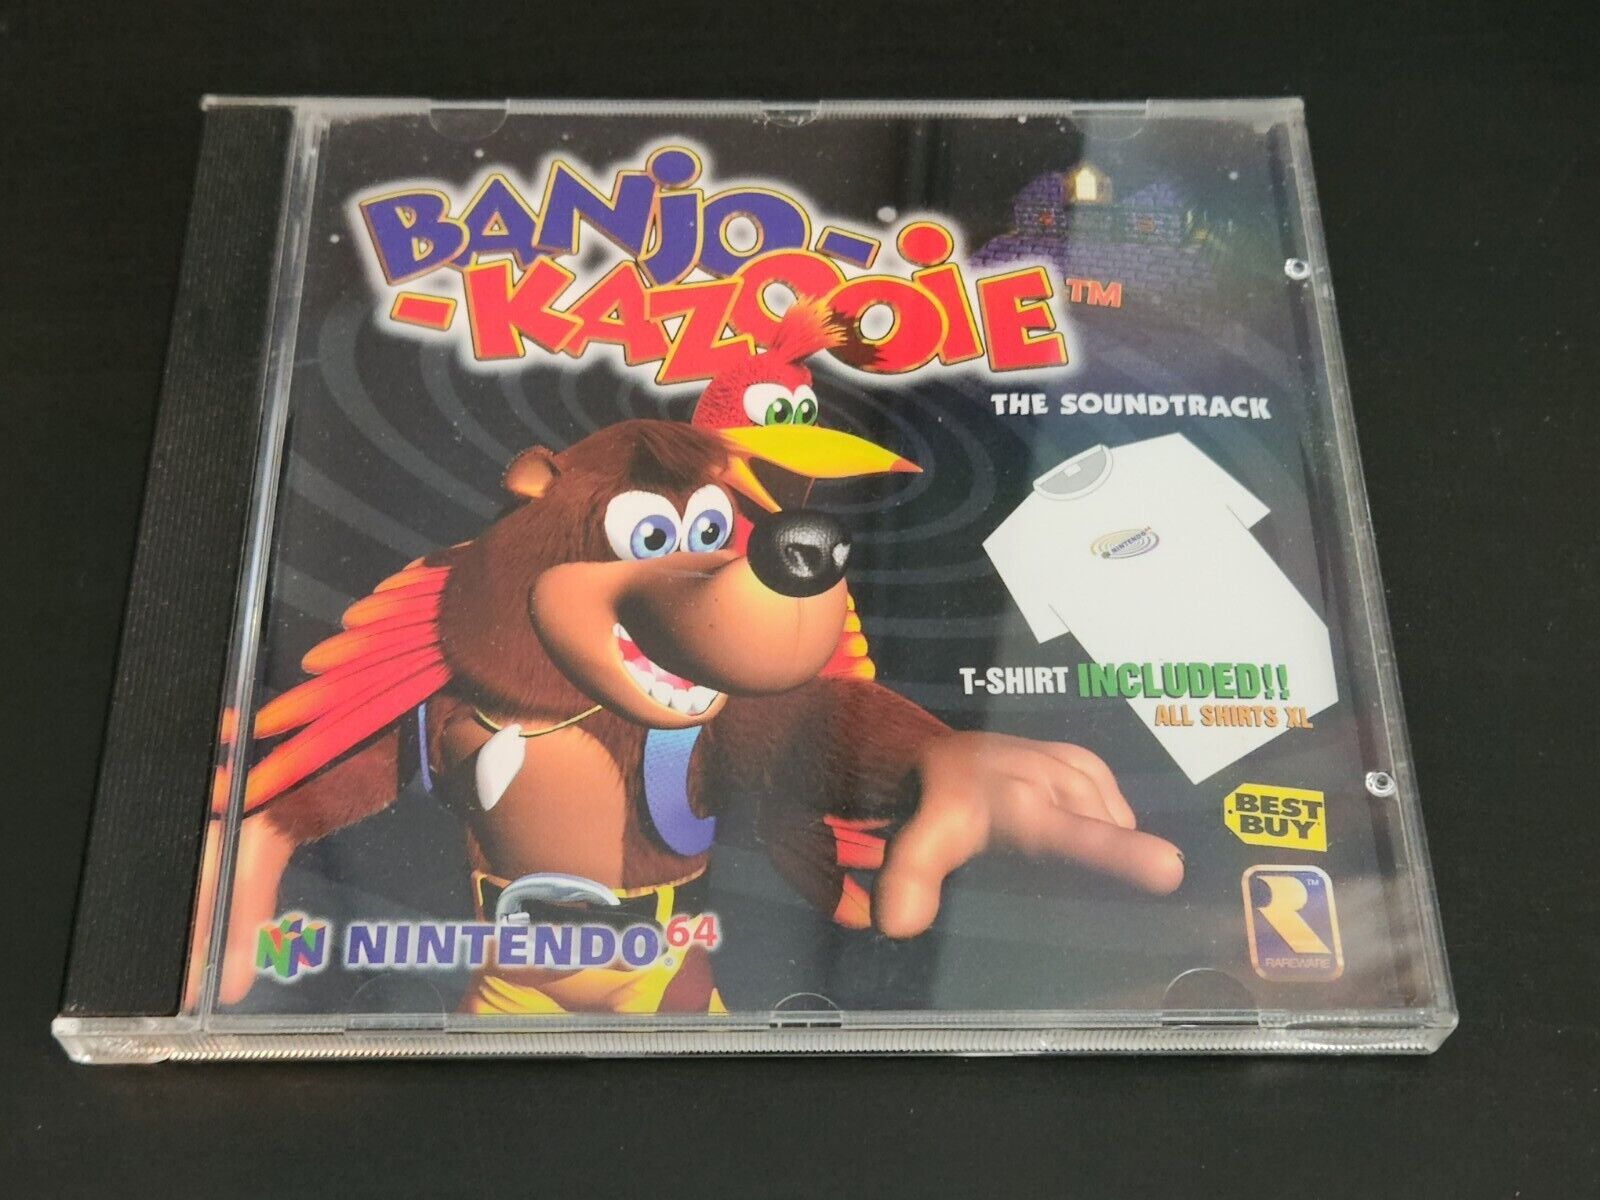 Nintendo 64 Banjo Kazooie Video Game Soundtrack CD Best Buy Exclusive * RARE *